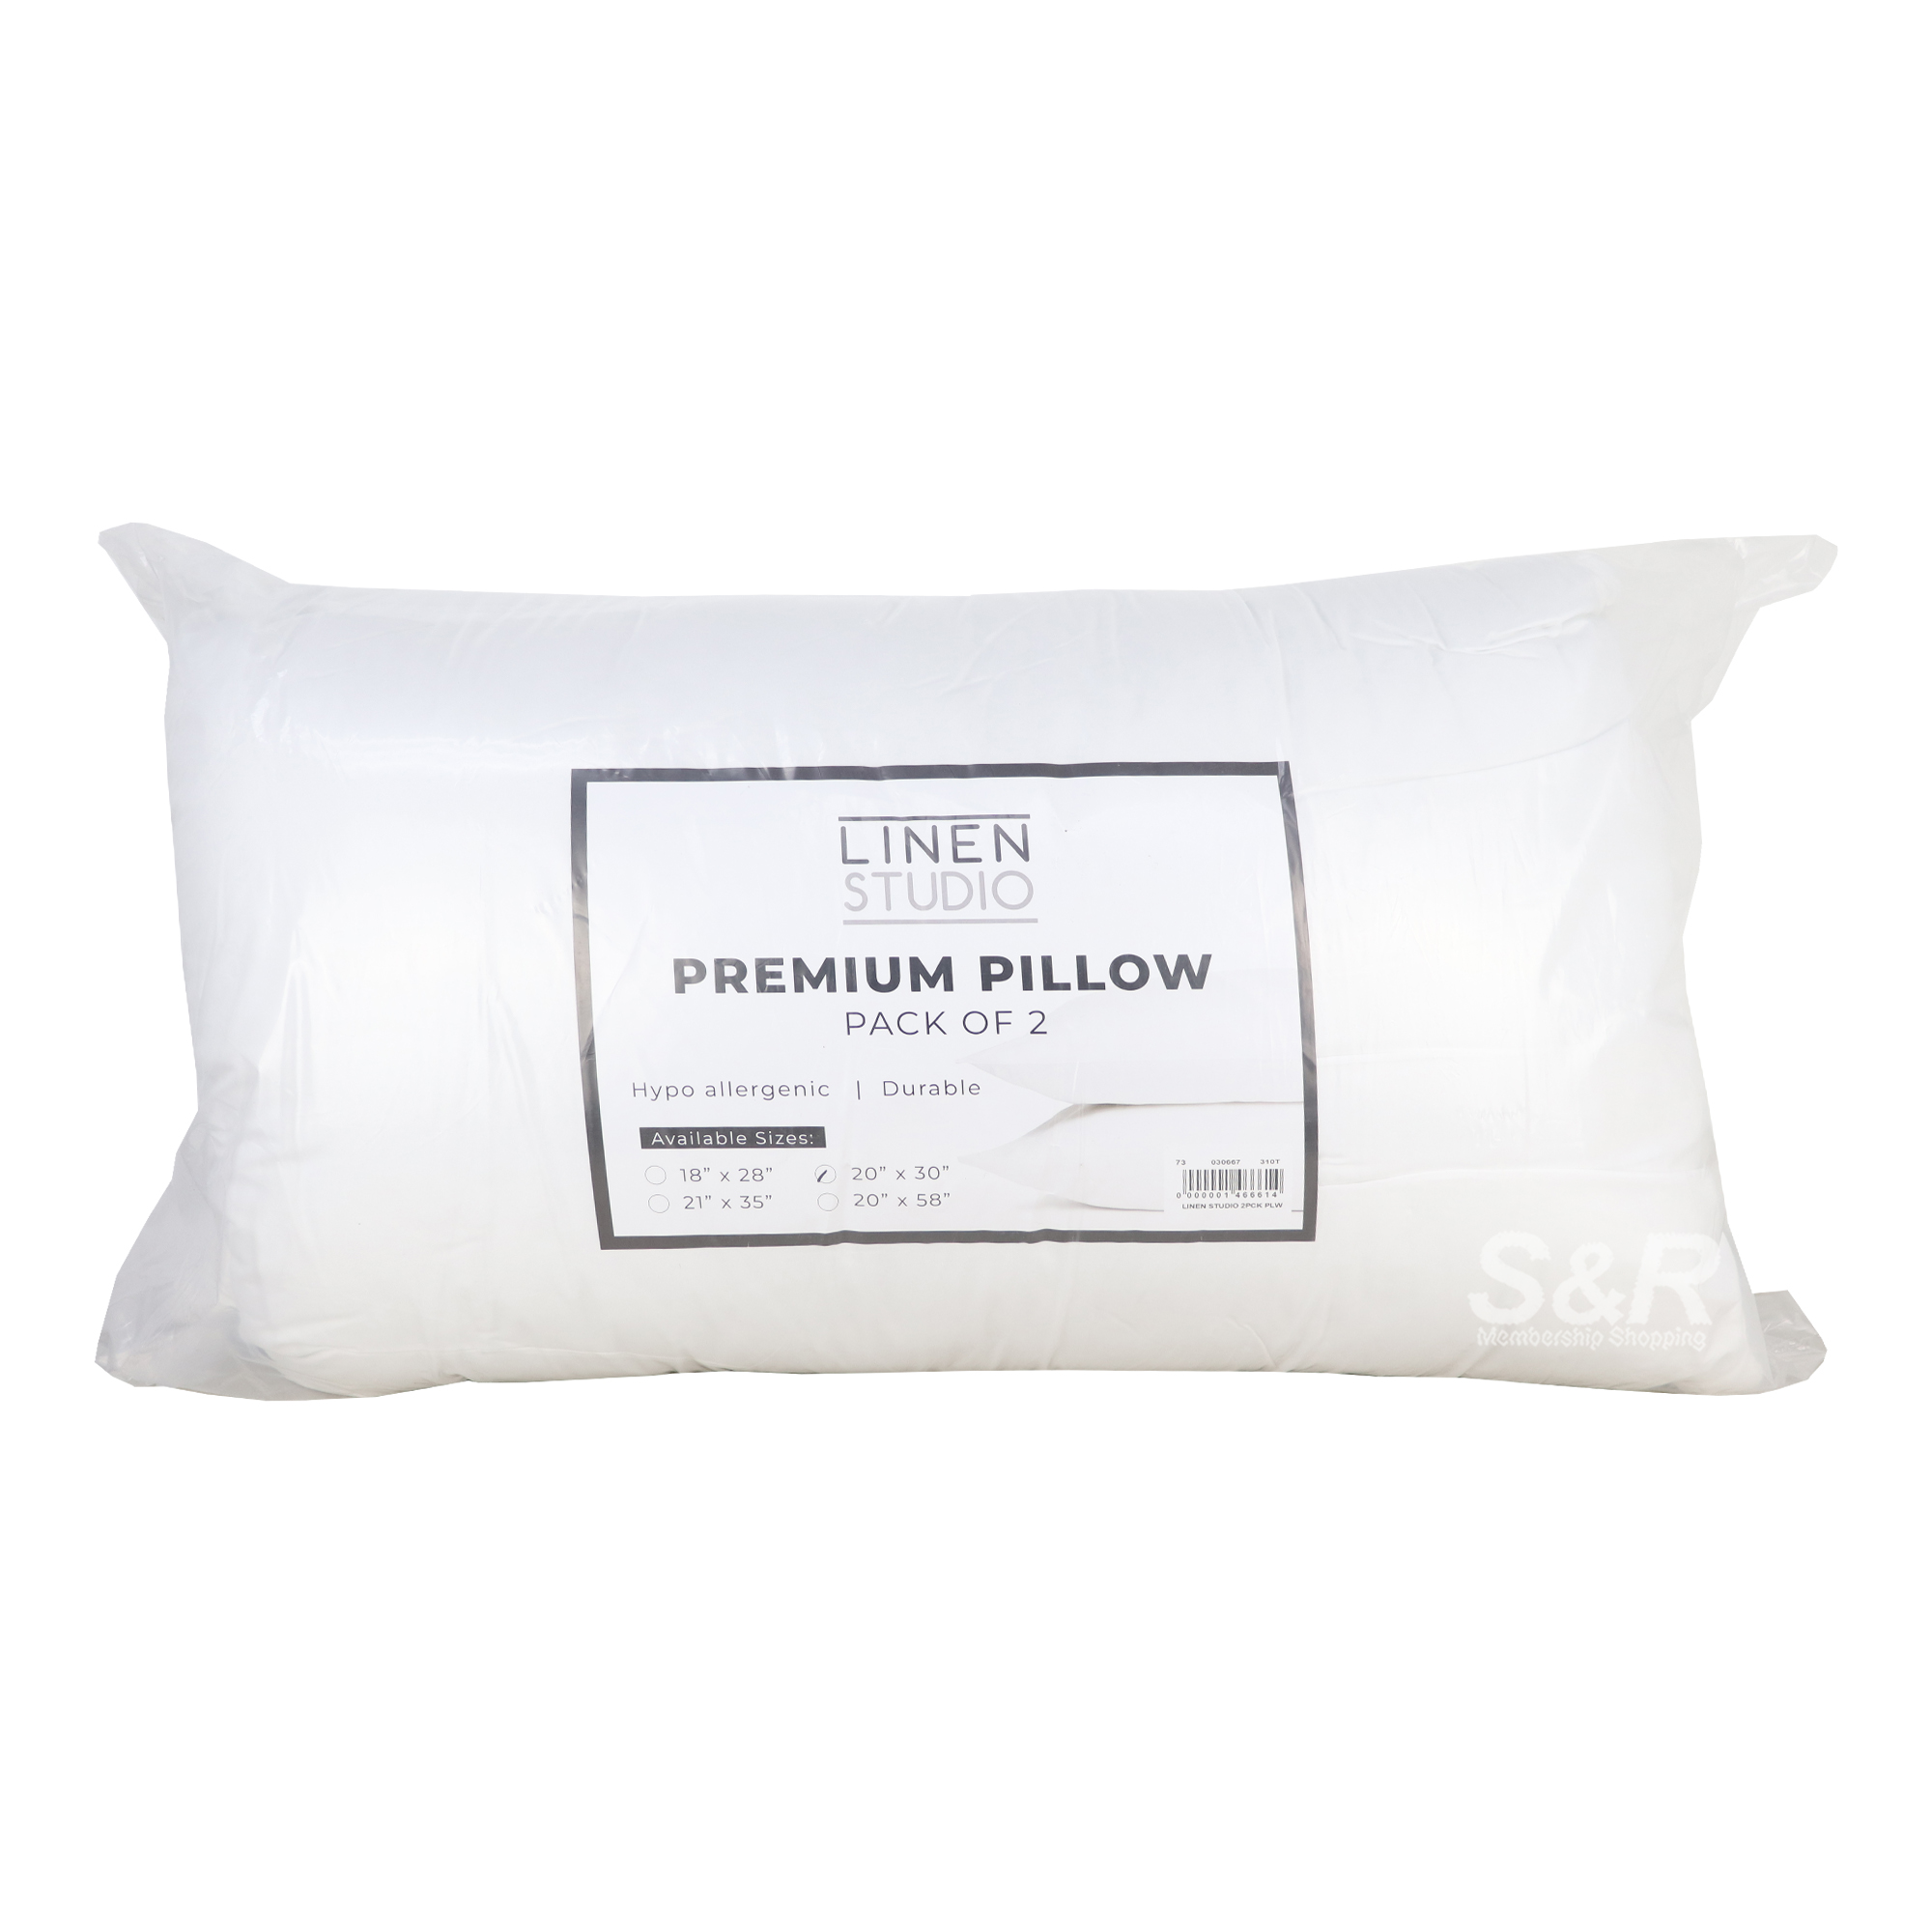 Linen Studio Premium Pillow Pack of 2 20x30